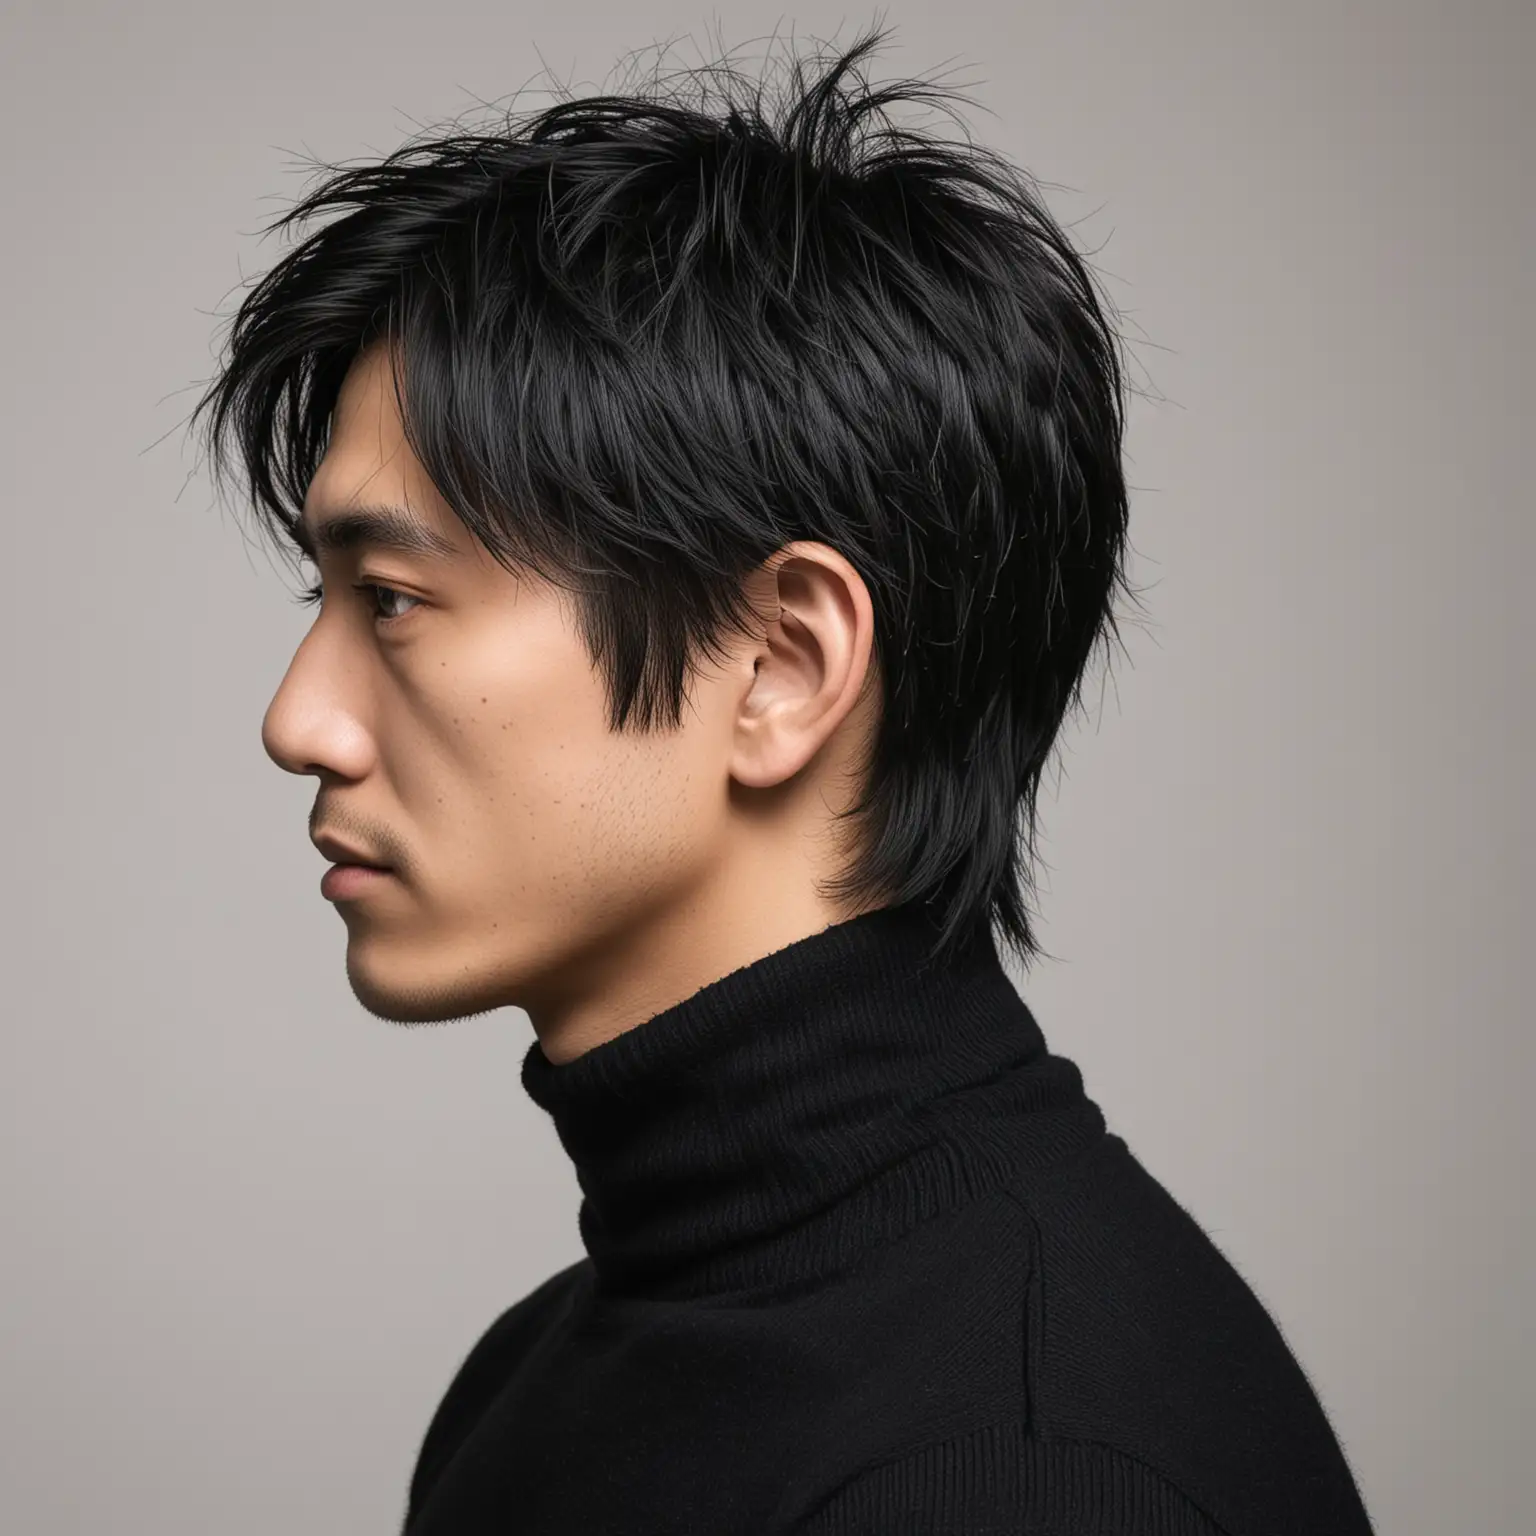 Japanese Man with Harry Potter Hair in Black Turtleneck Portrait